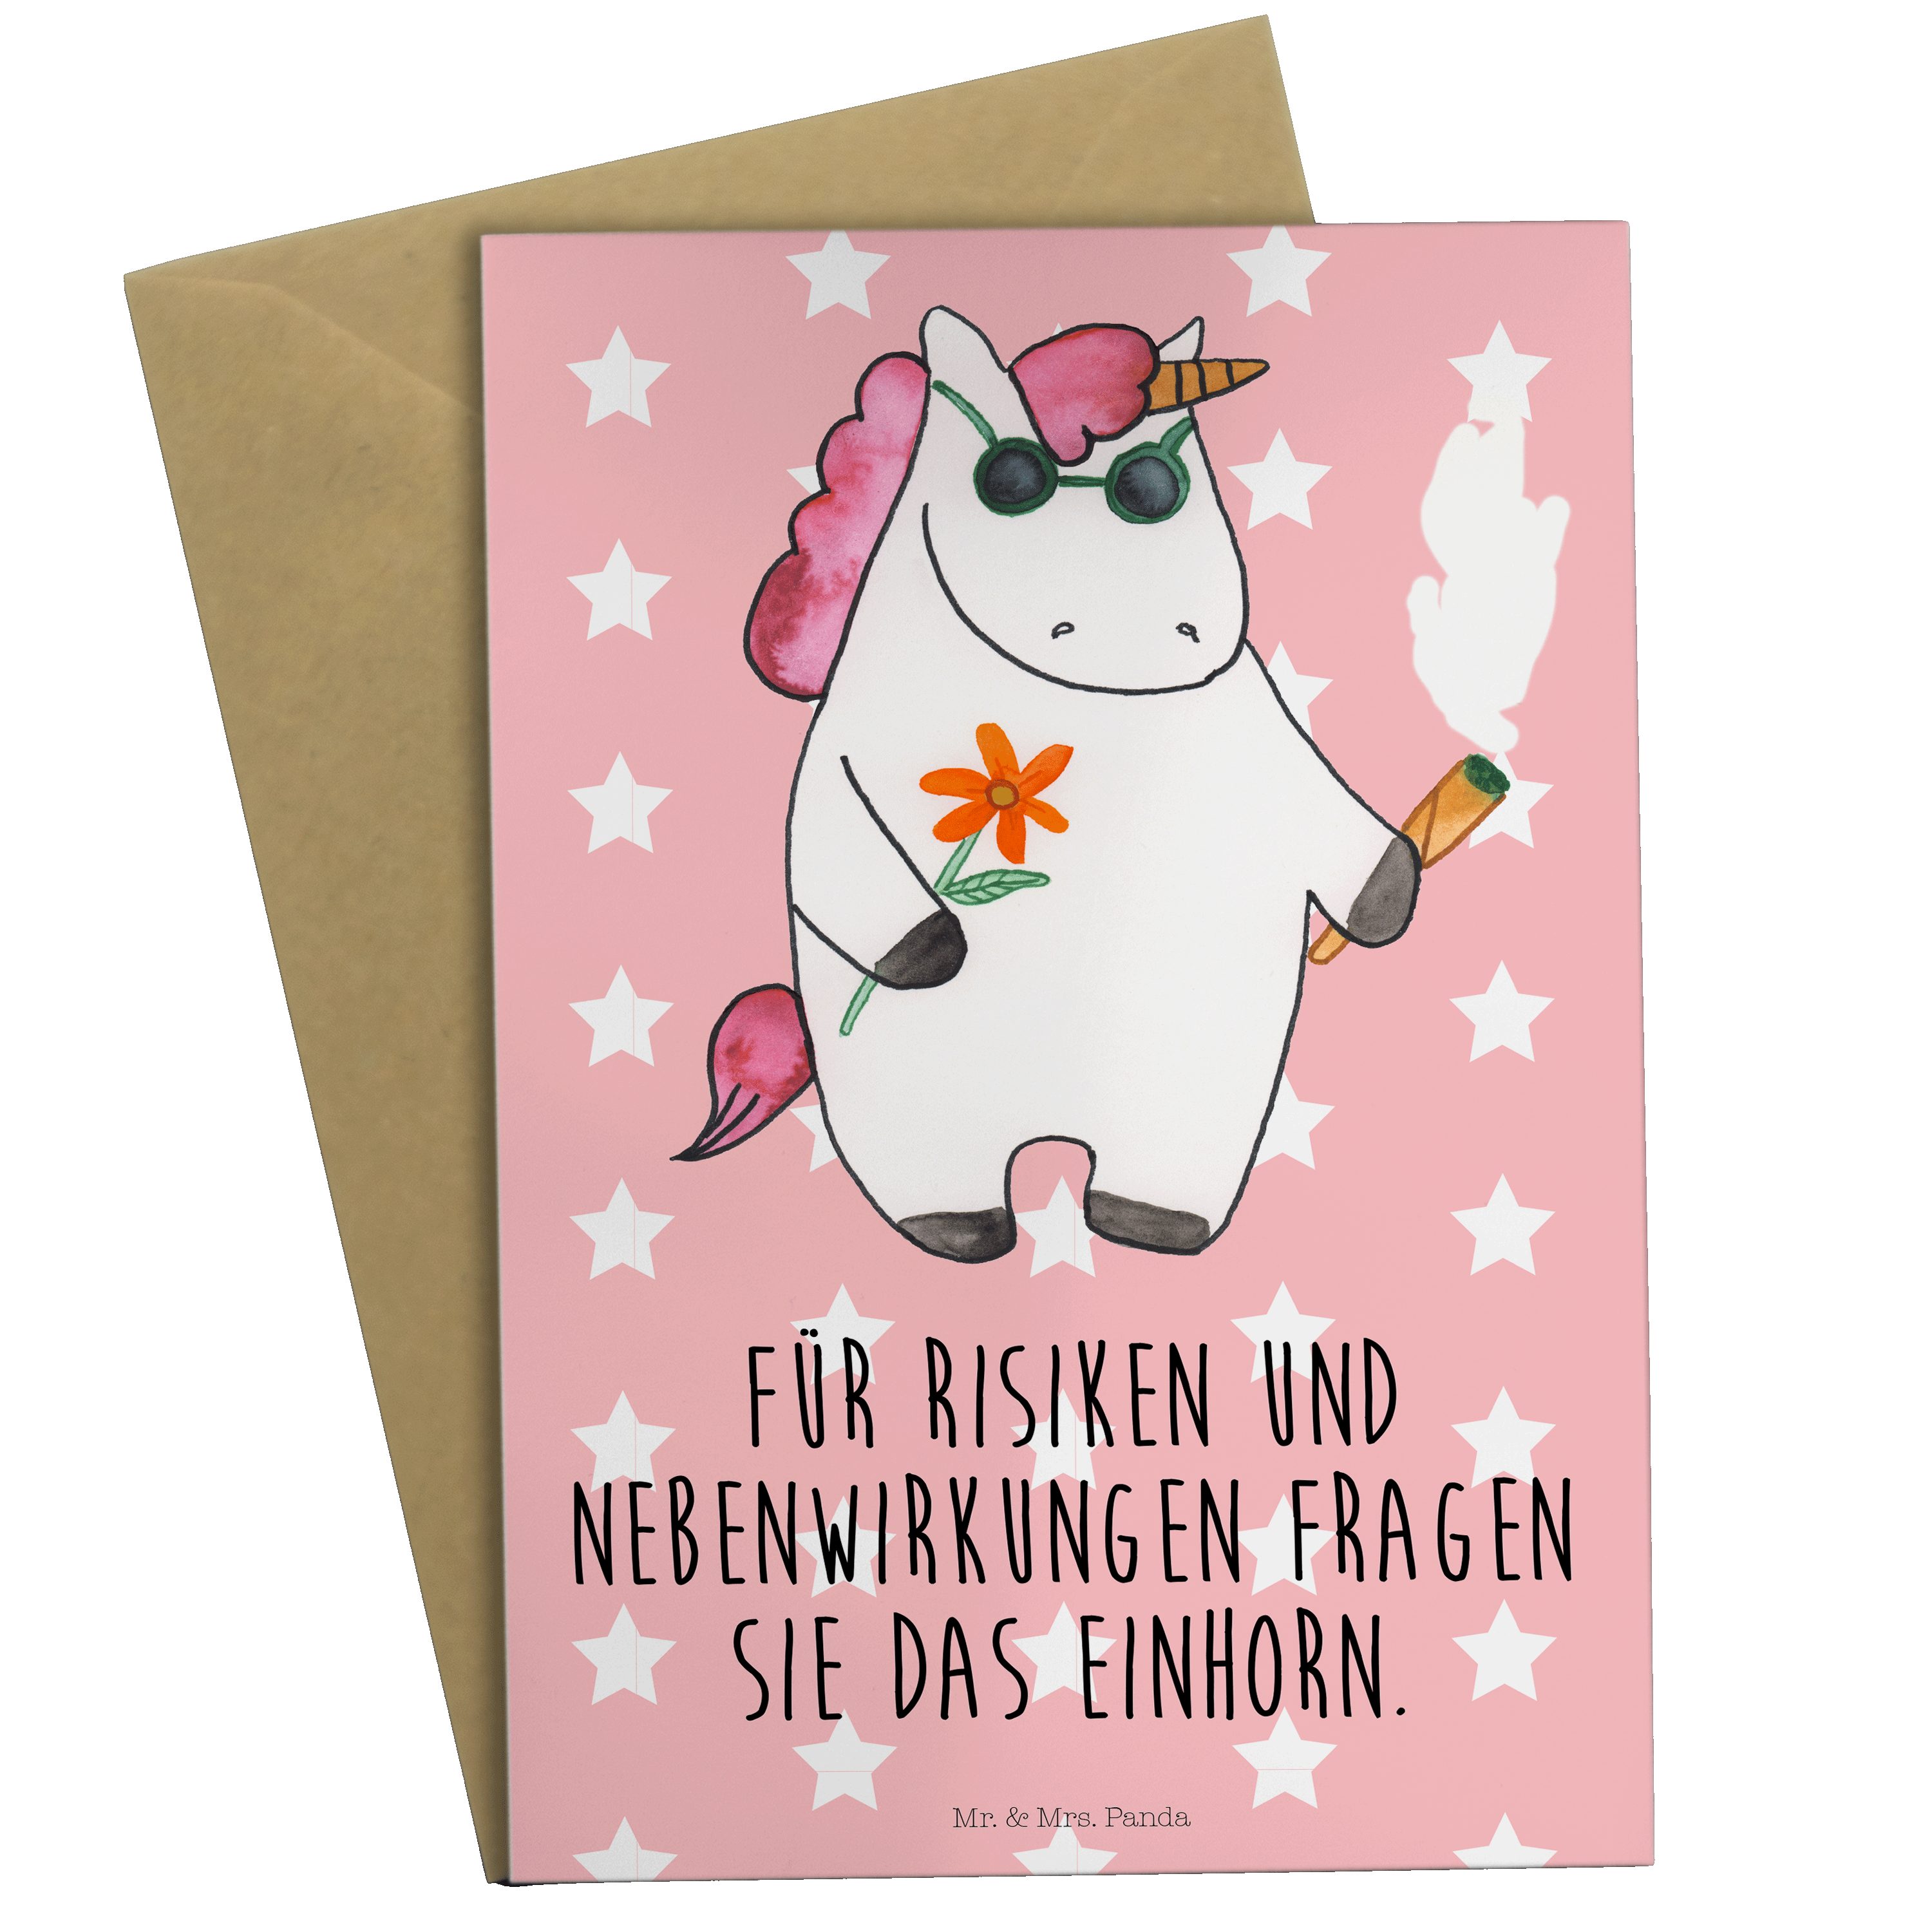 Mr. & Mrs. Panda Grußkarte Einhorn Woodstock - Rot Pastell - Geschenk, Klappkarte, Geburtstagska